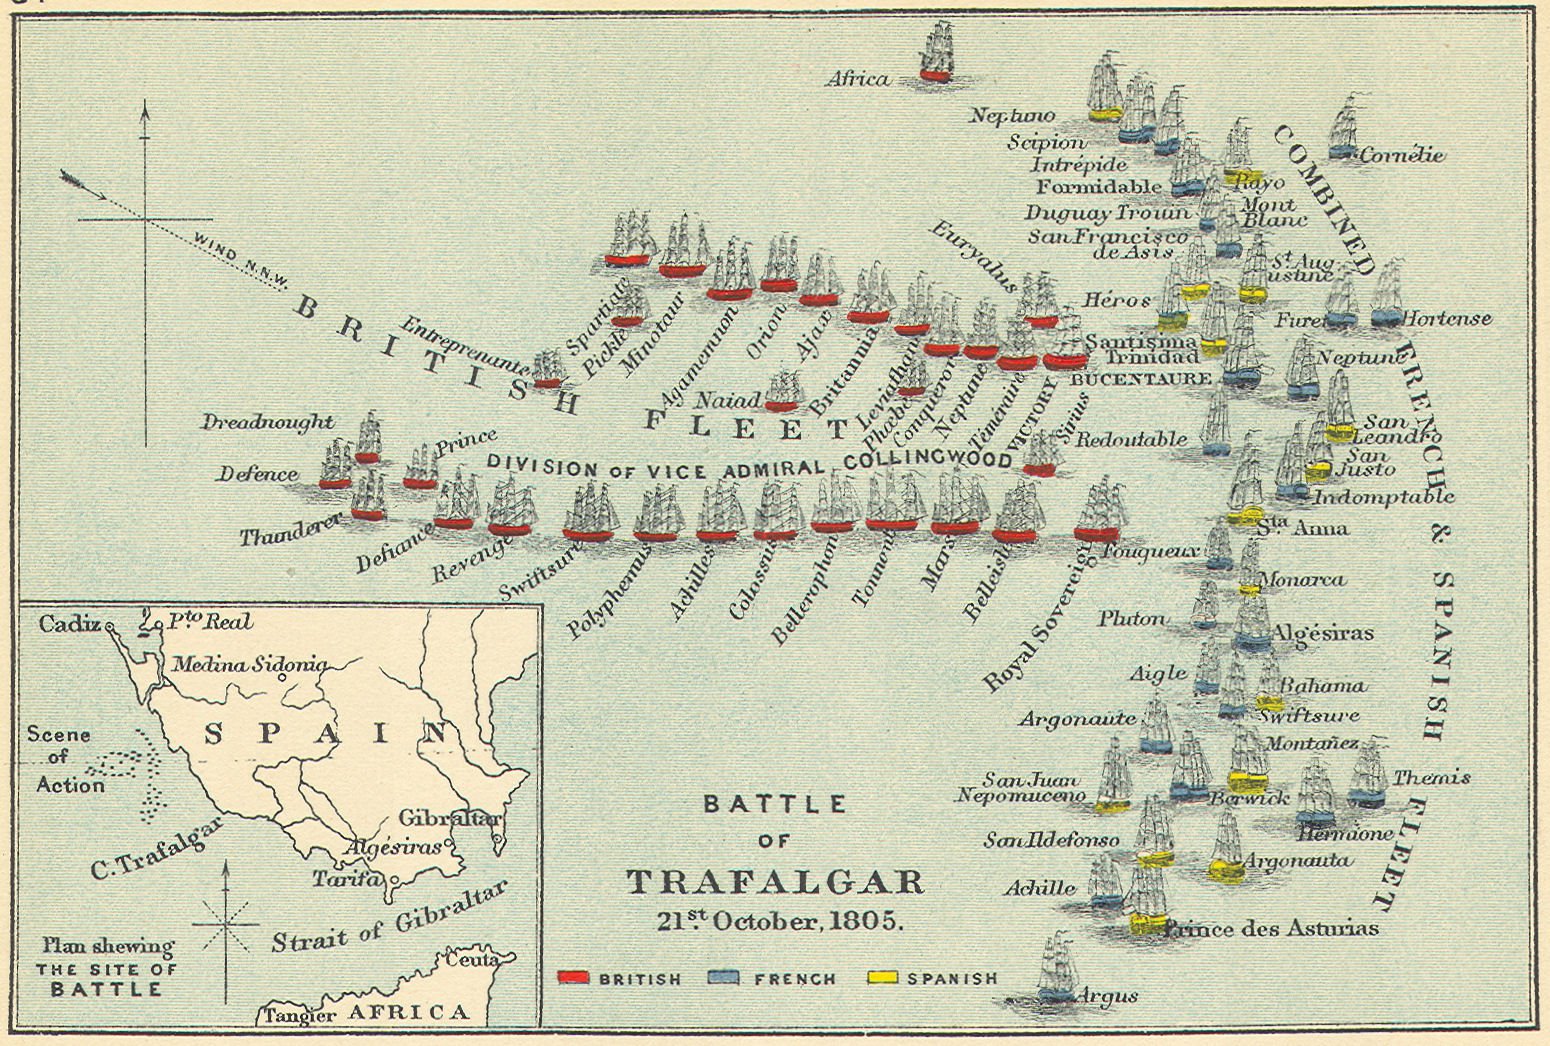 A Grande Batalha Inglesa